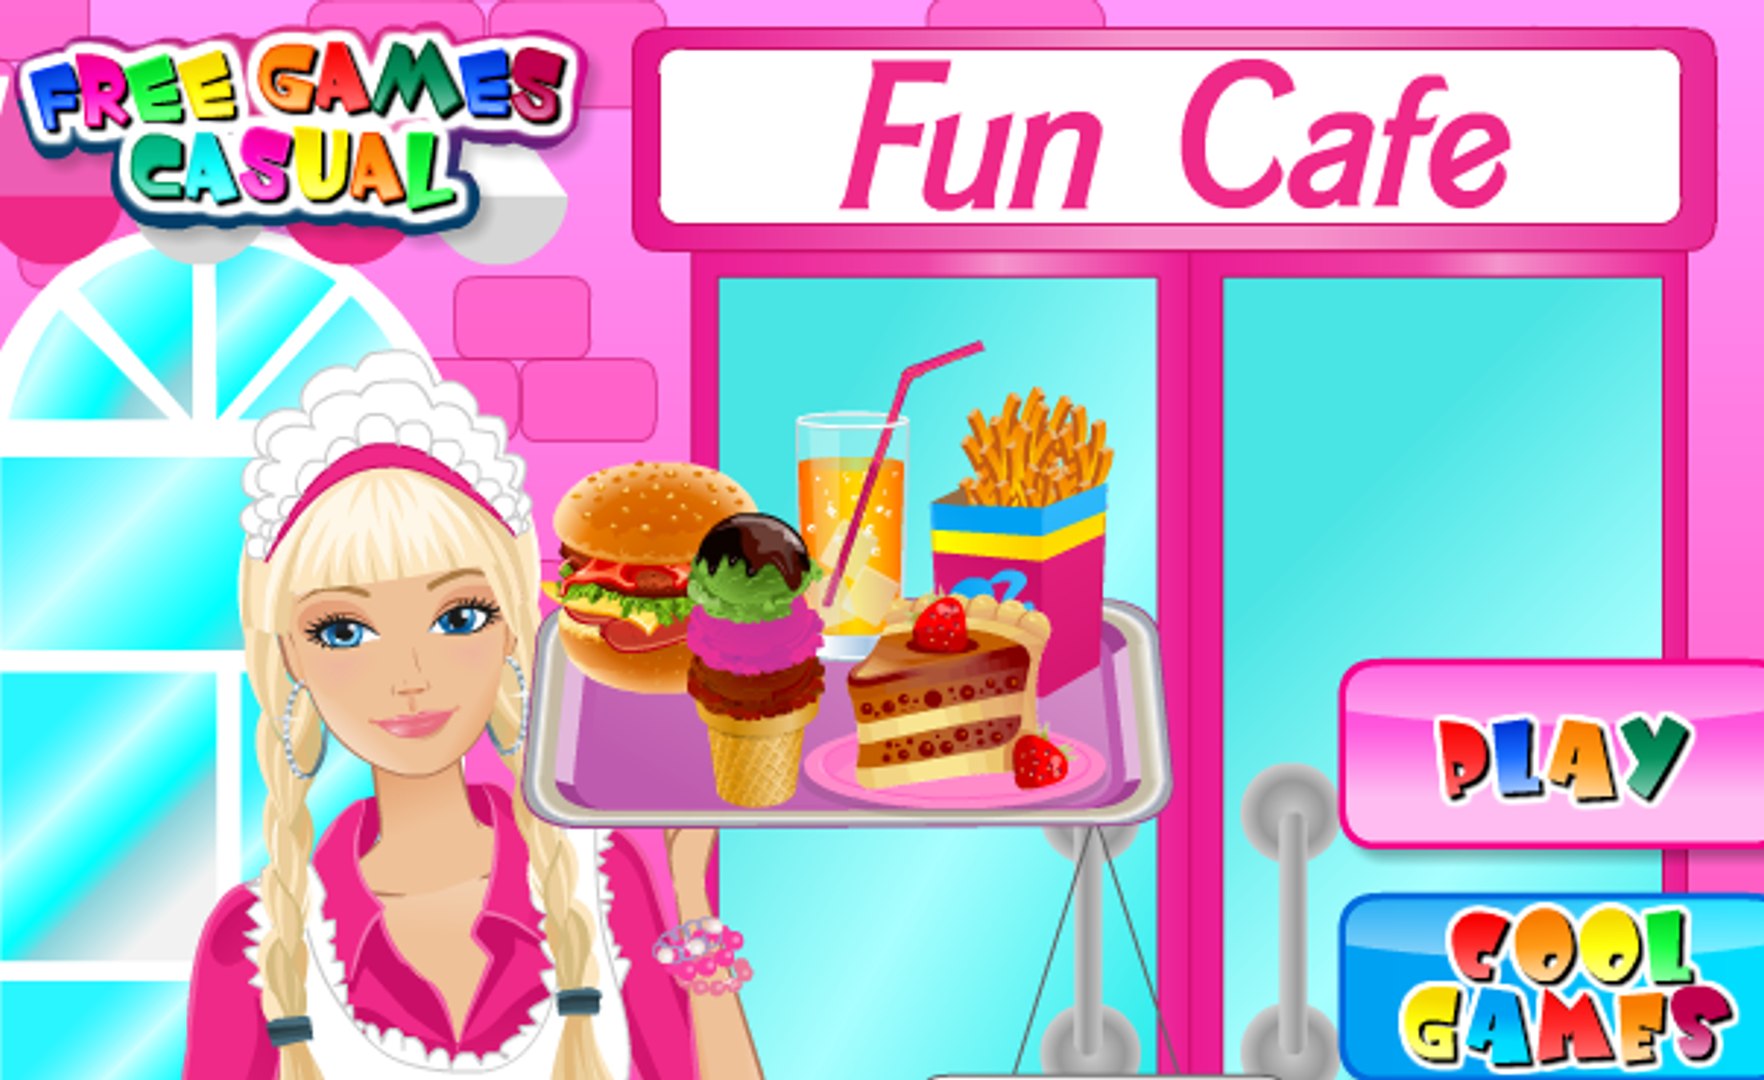 Barbie Online Games To Play Free Barbie Cartoon Game - Barbie A